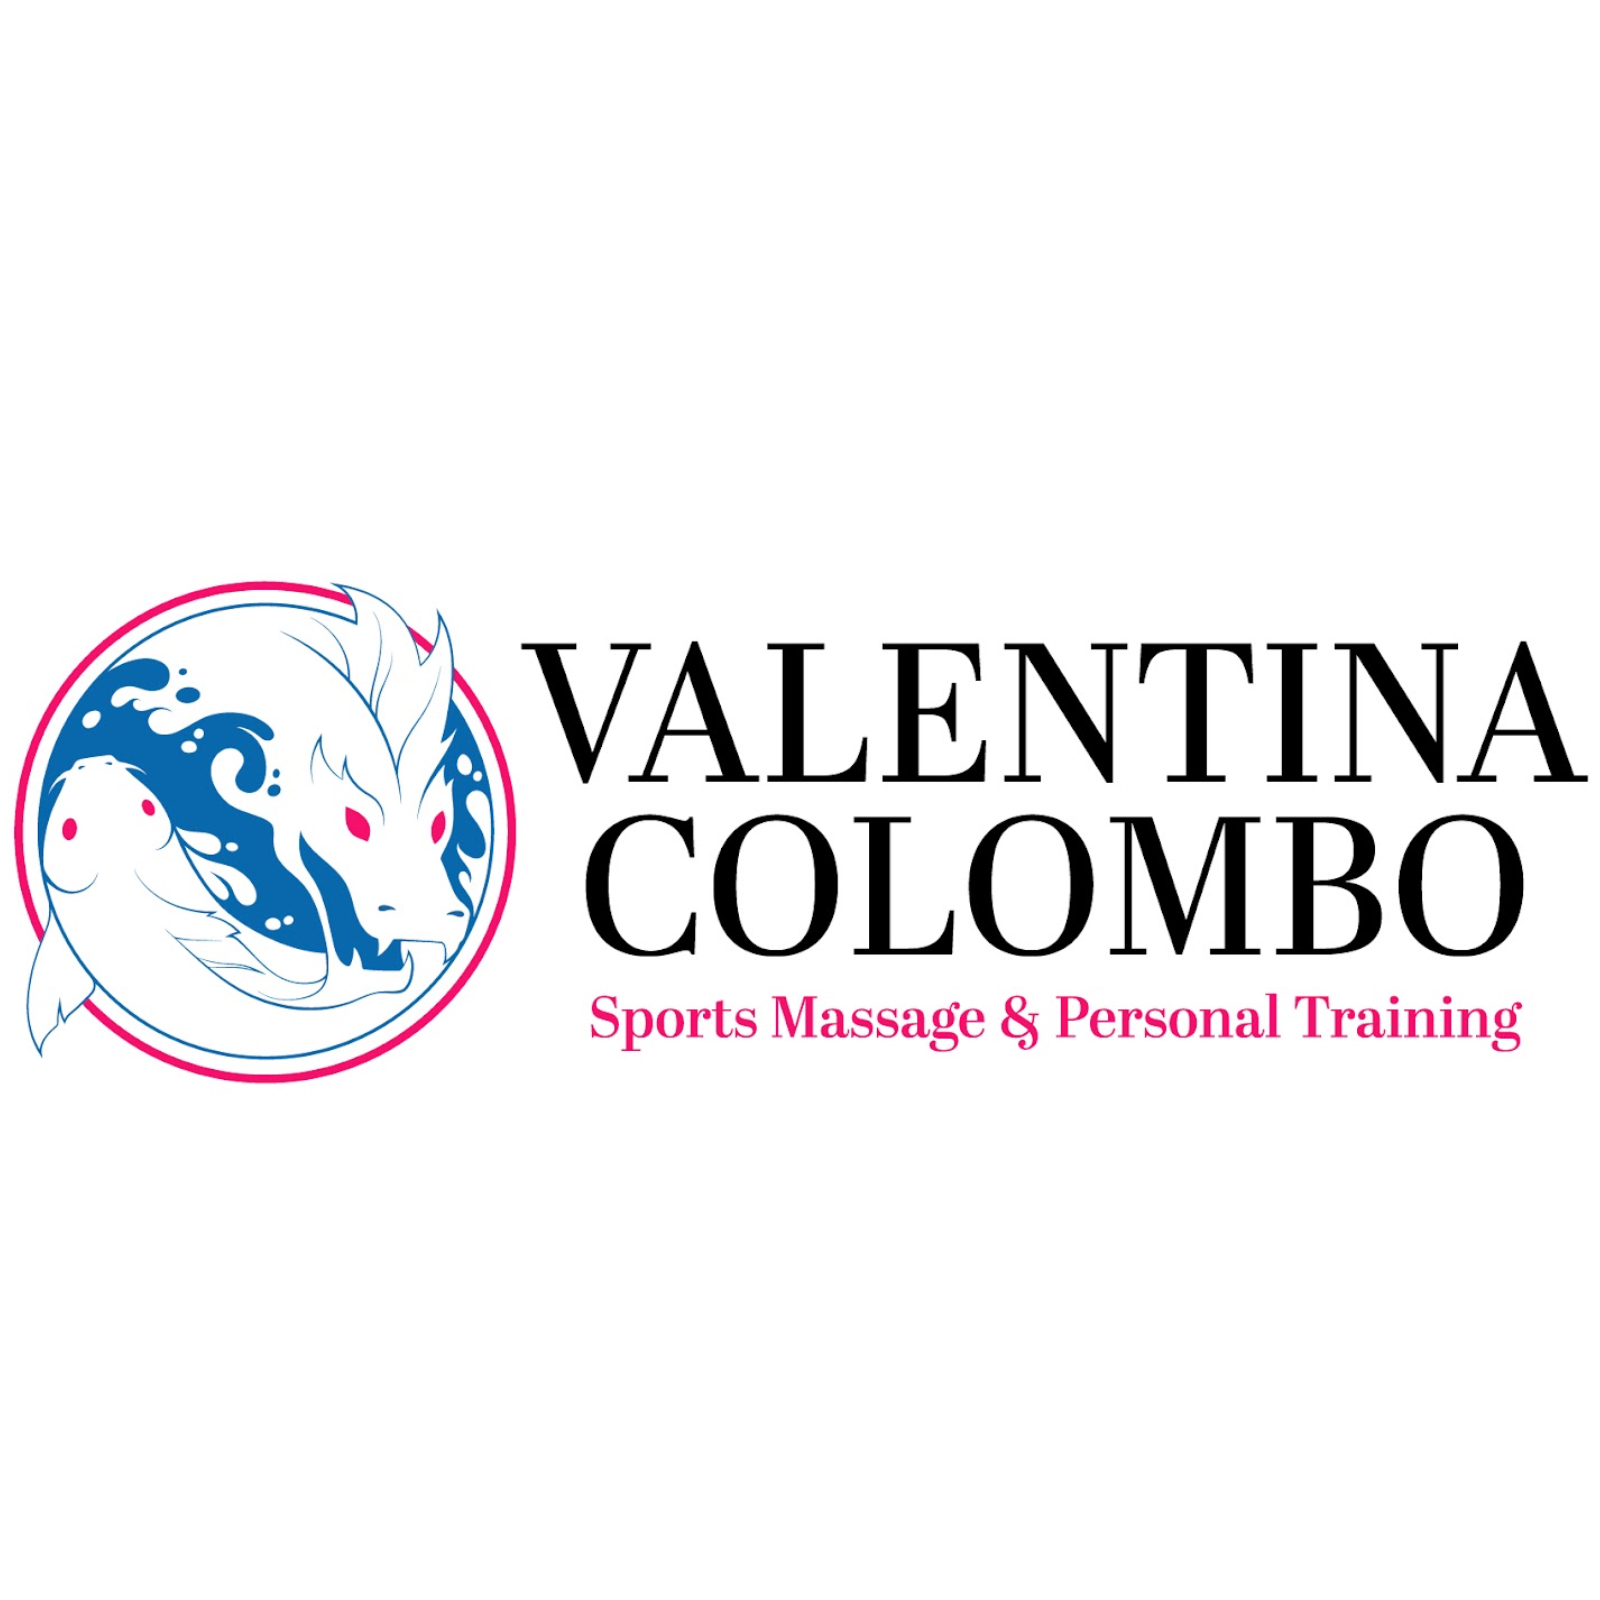 Go to Valentina Colombo - December 2022's website